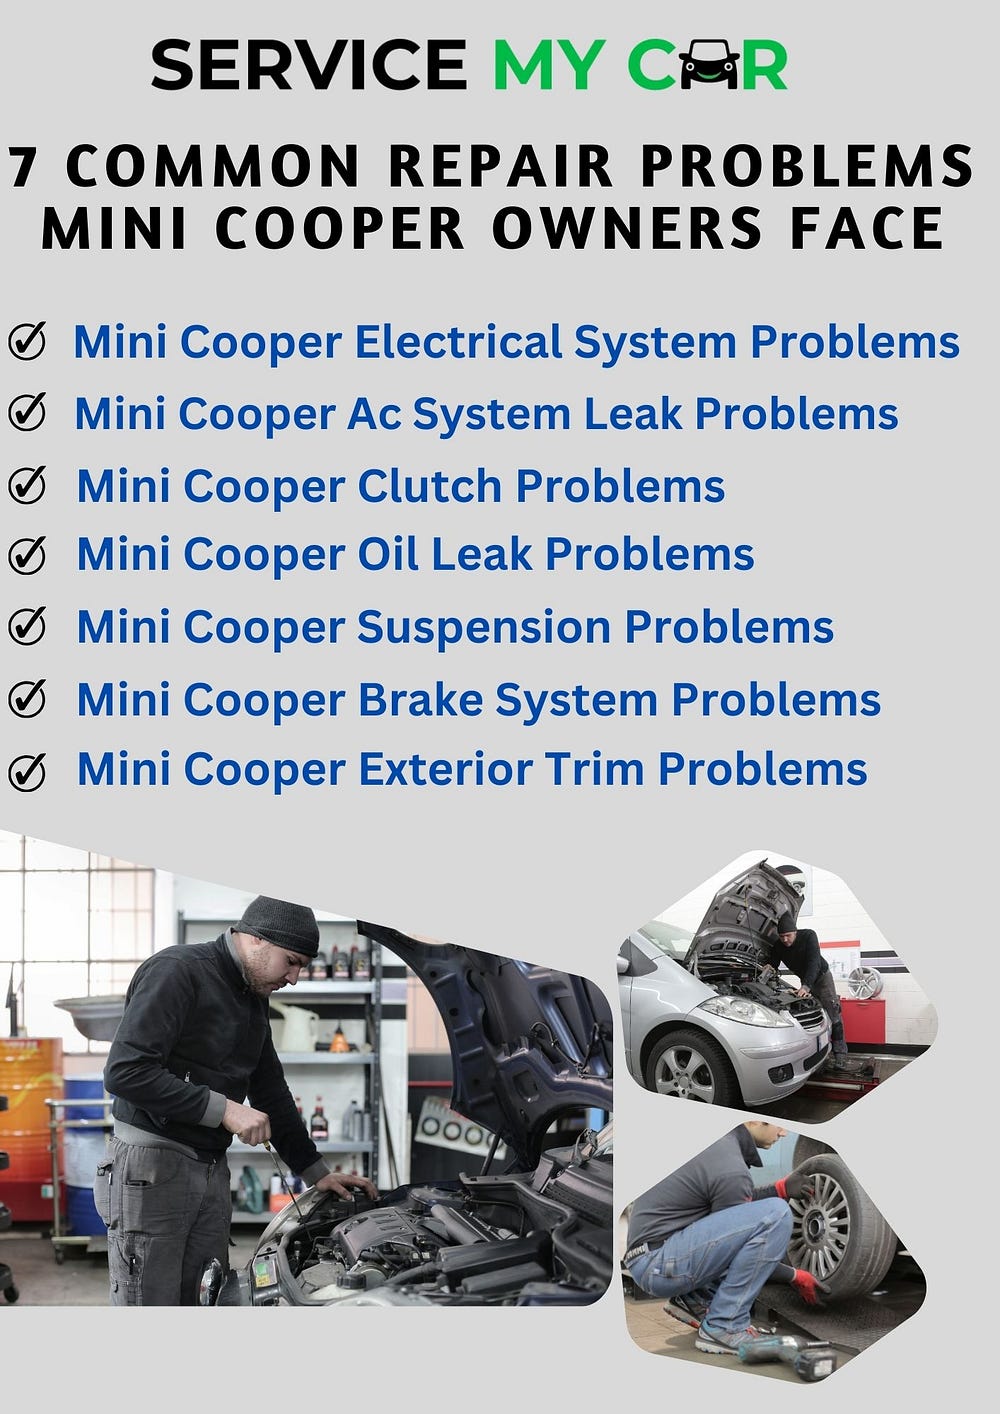 7 Common Repair Problems Mini Cooper Owners Face